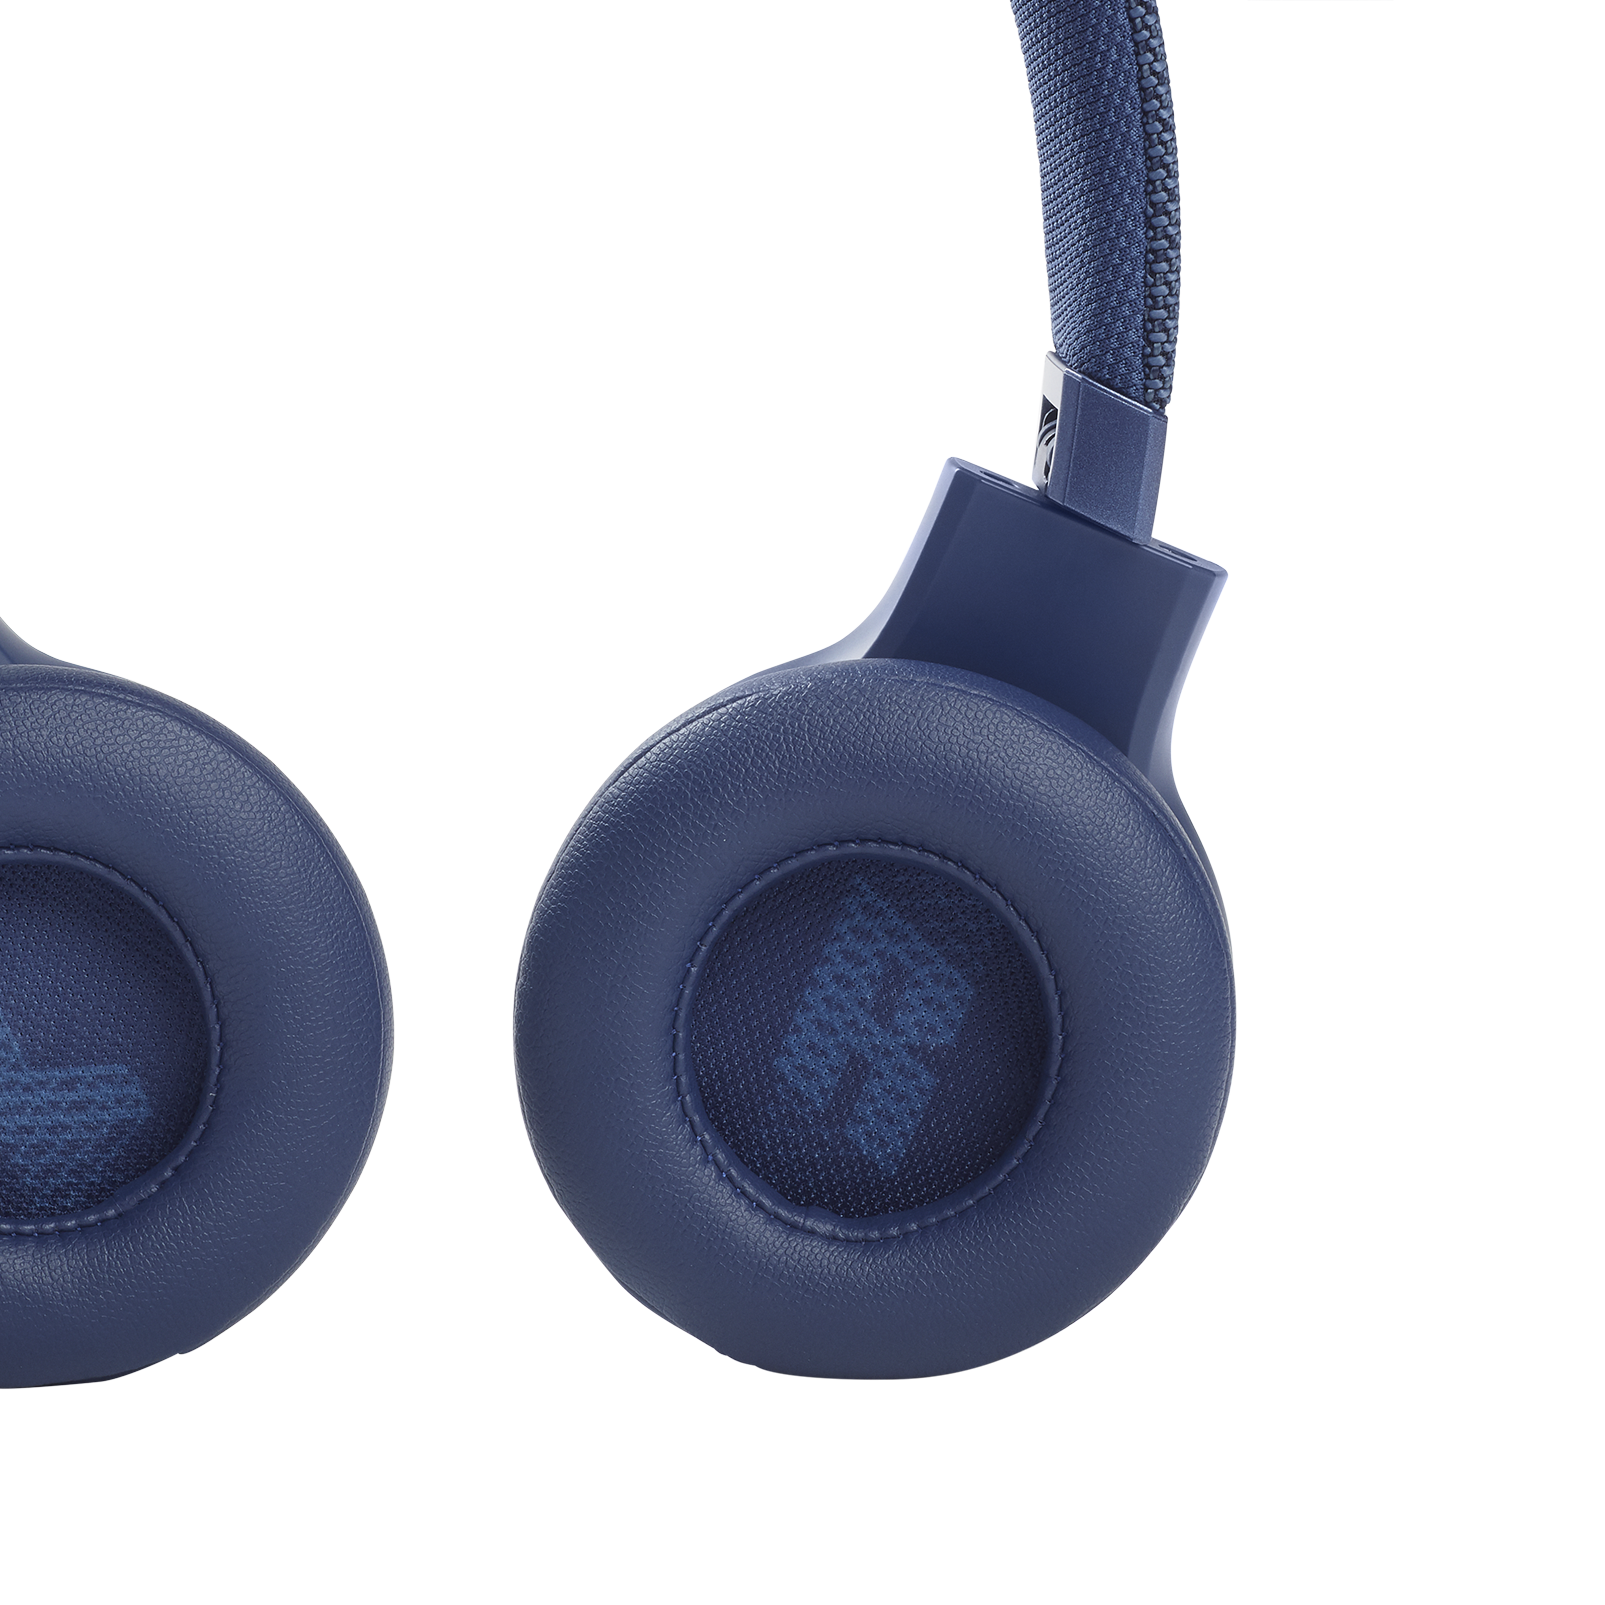 JBL Live 460NC - Blue - Wireless on-ear NC headphones - Detailshot 3